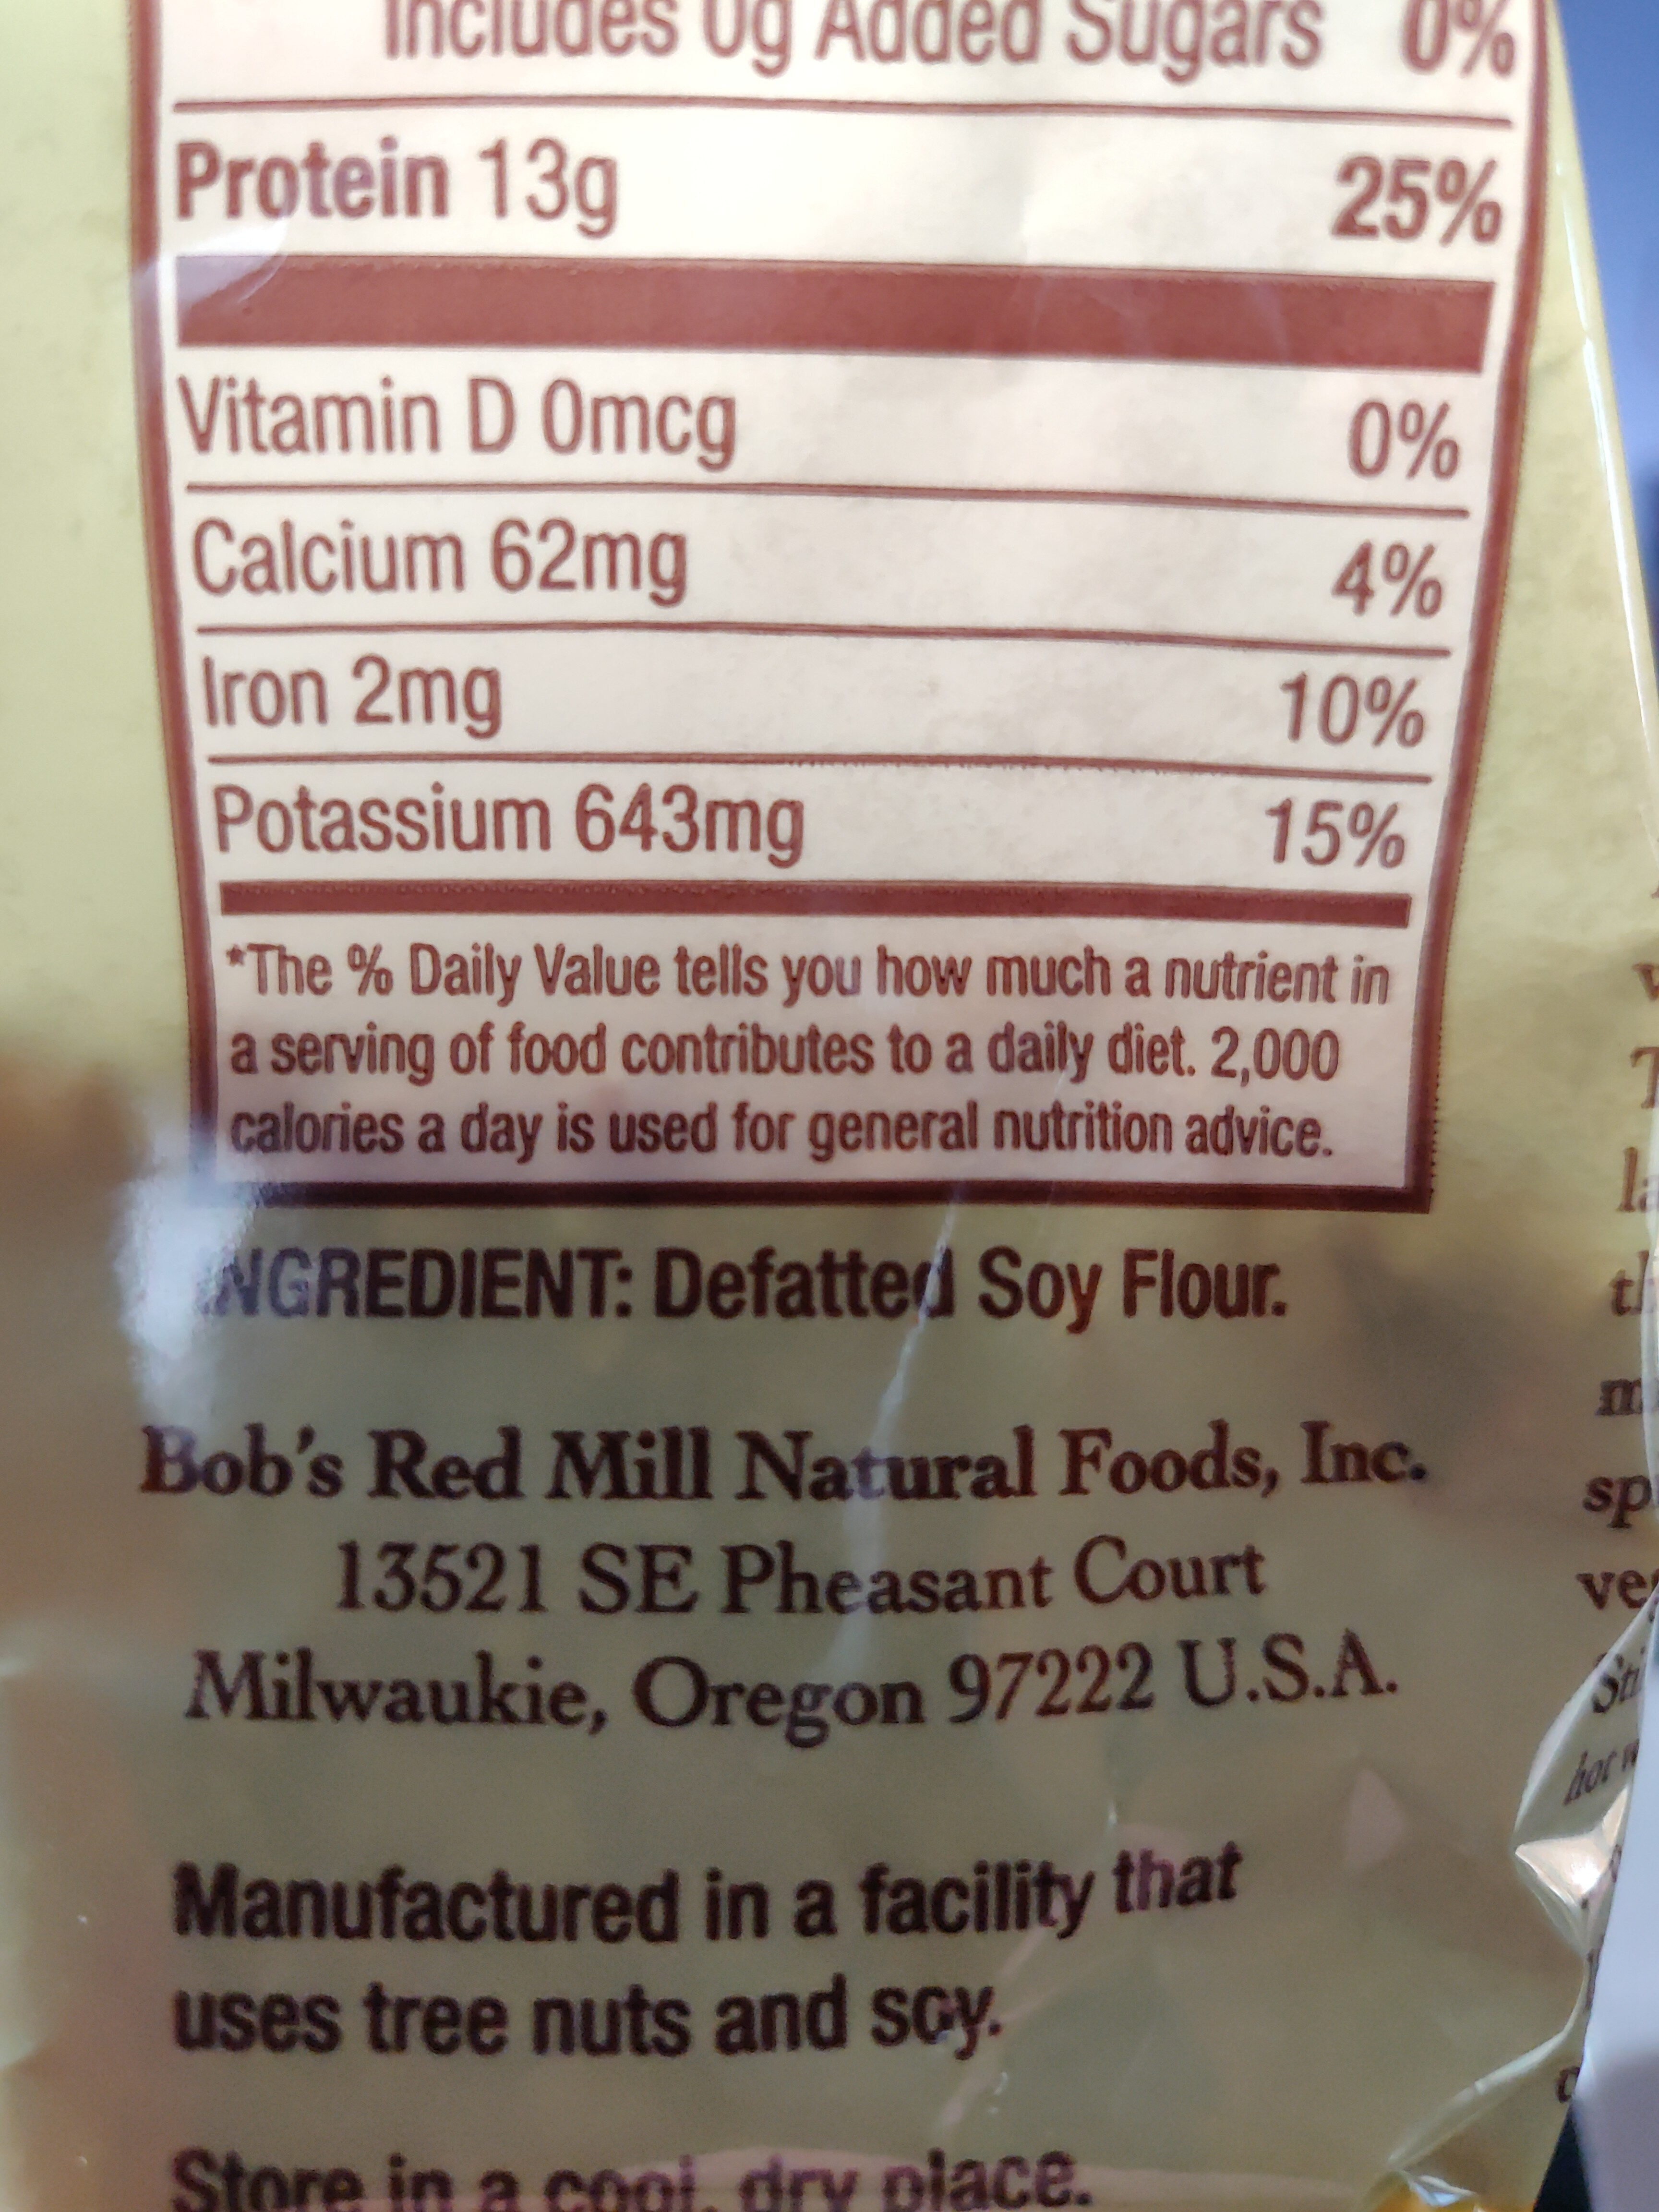 High protein textured vegetable protein - Ingredients - en